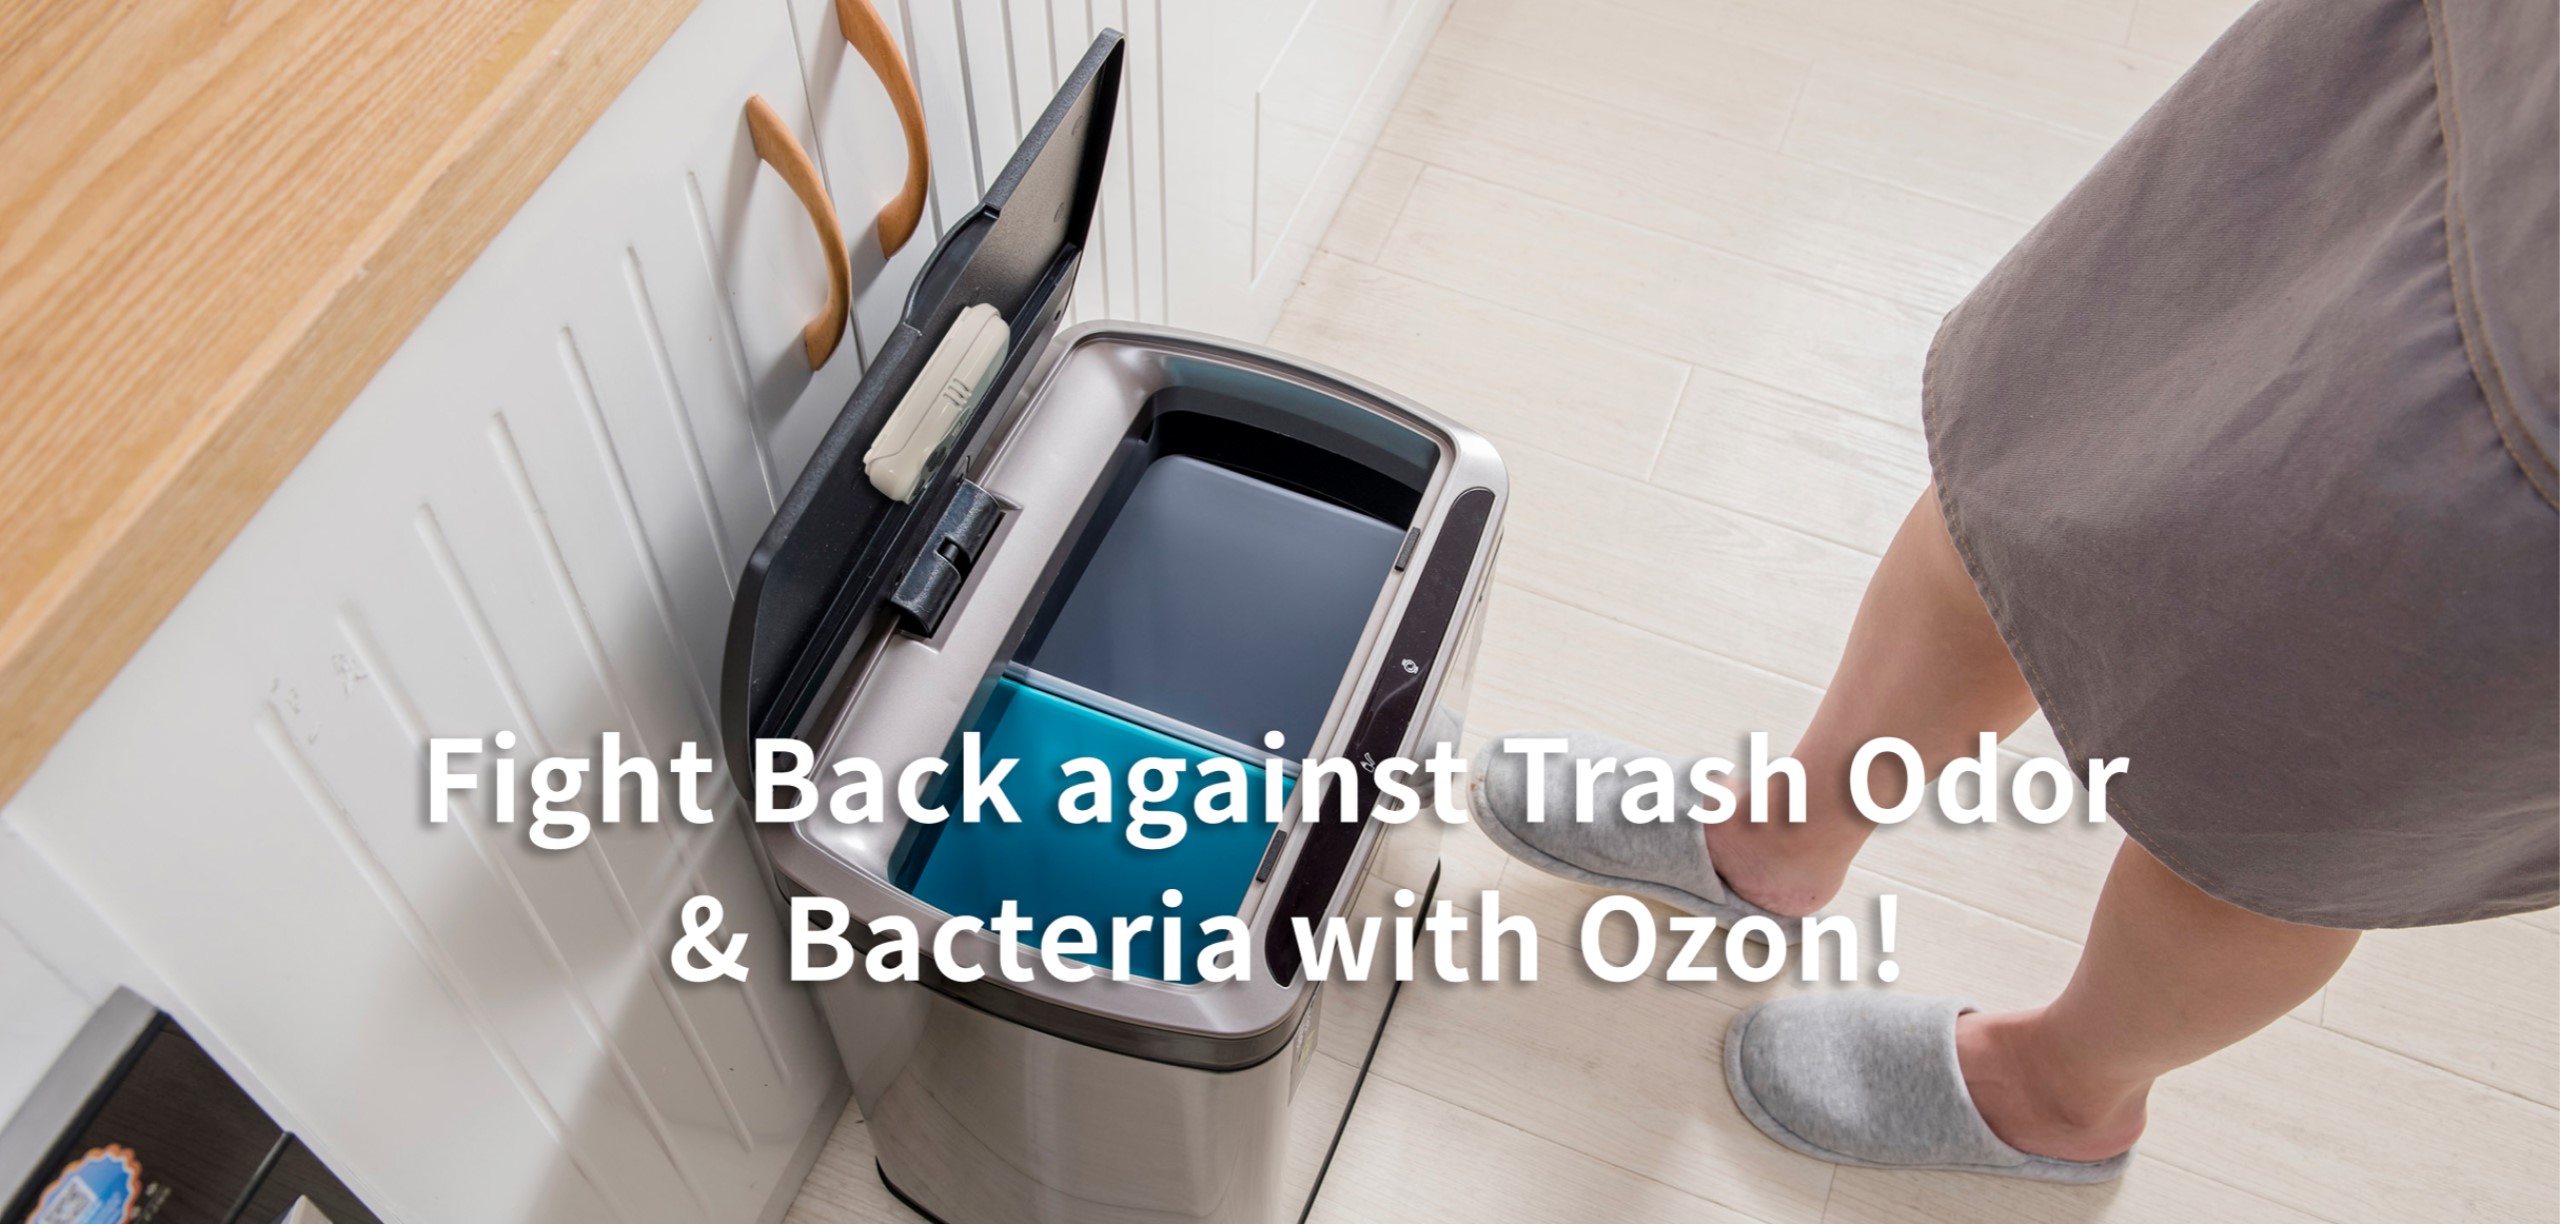 Oshiner O3 Bin Pro Deodoriser, remove odor & germs from trash bins